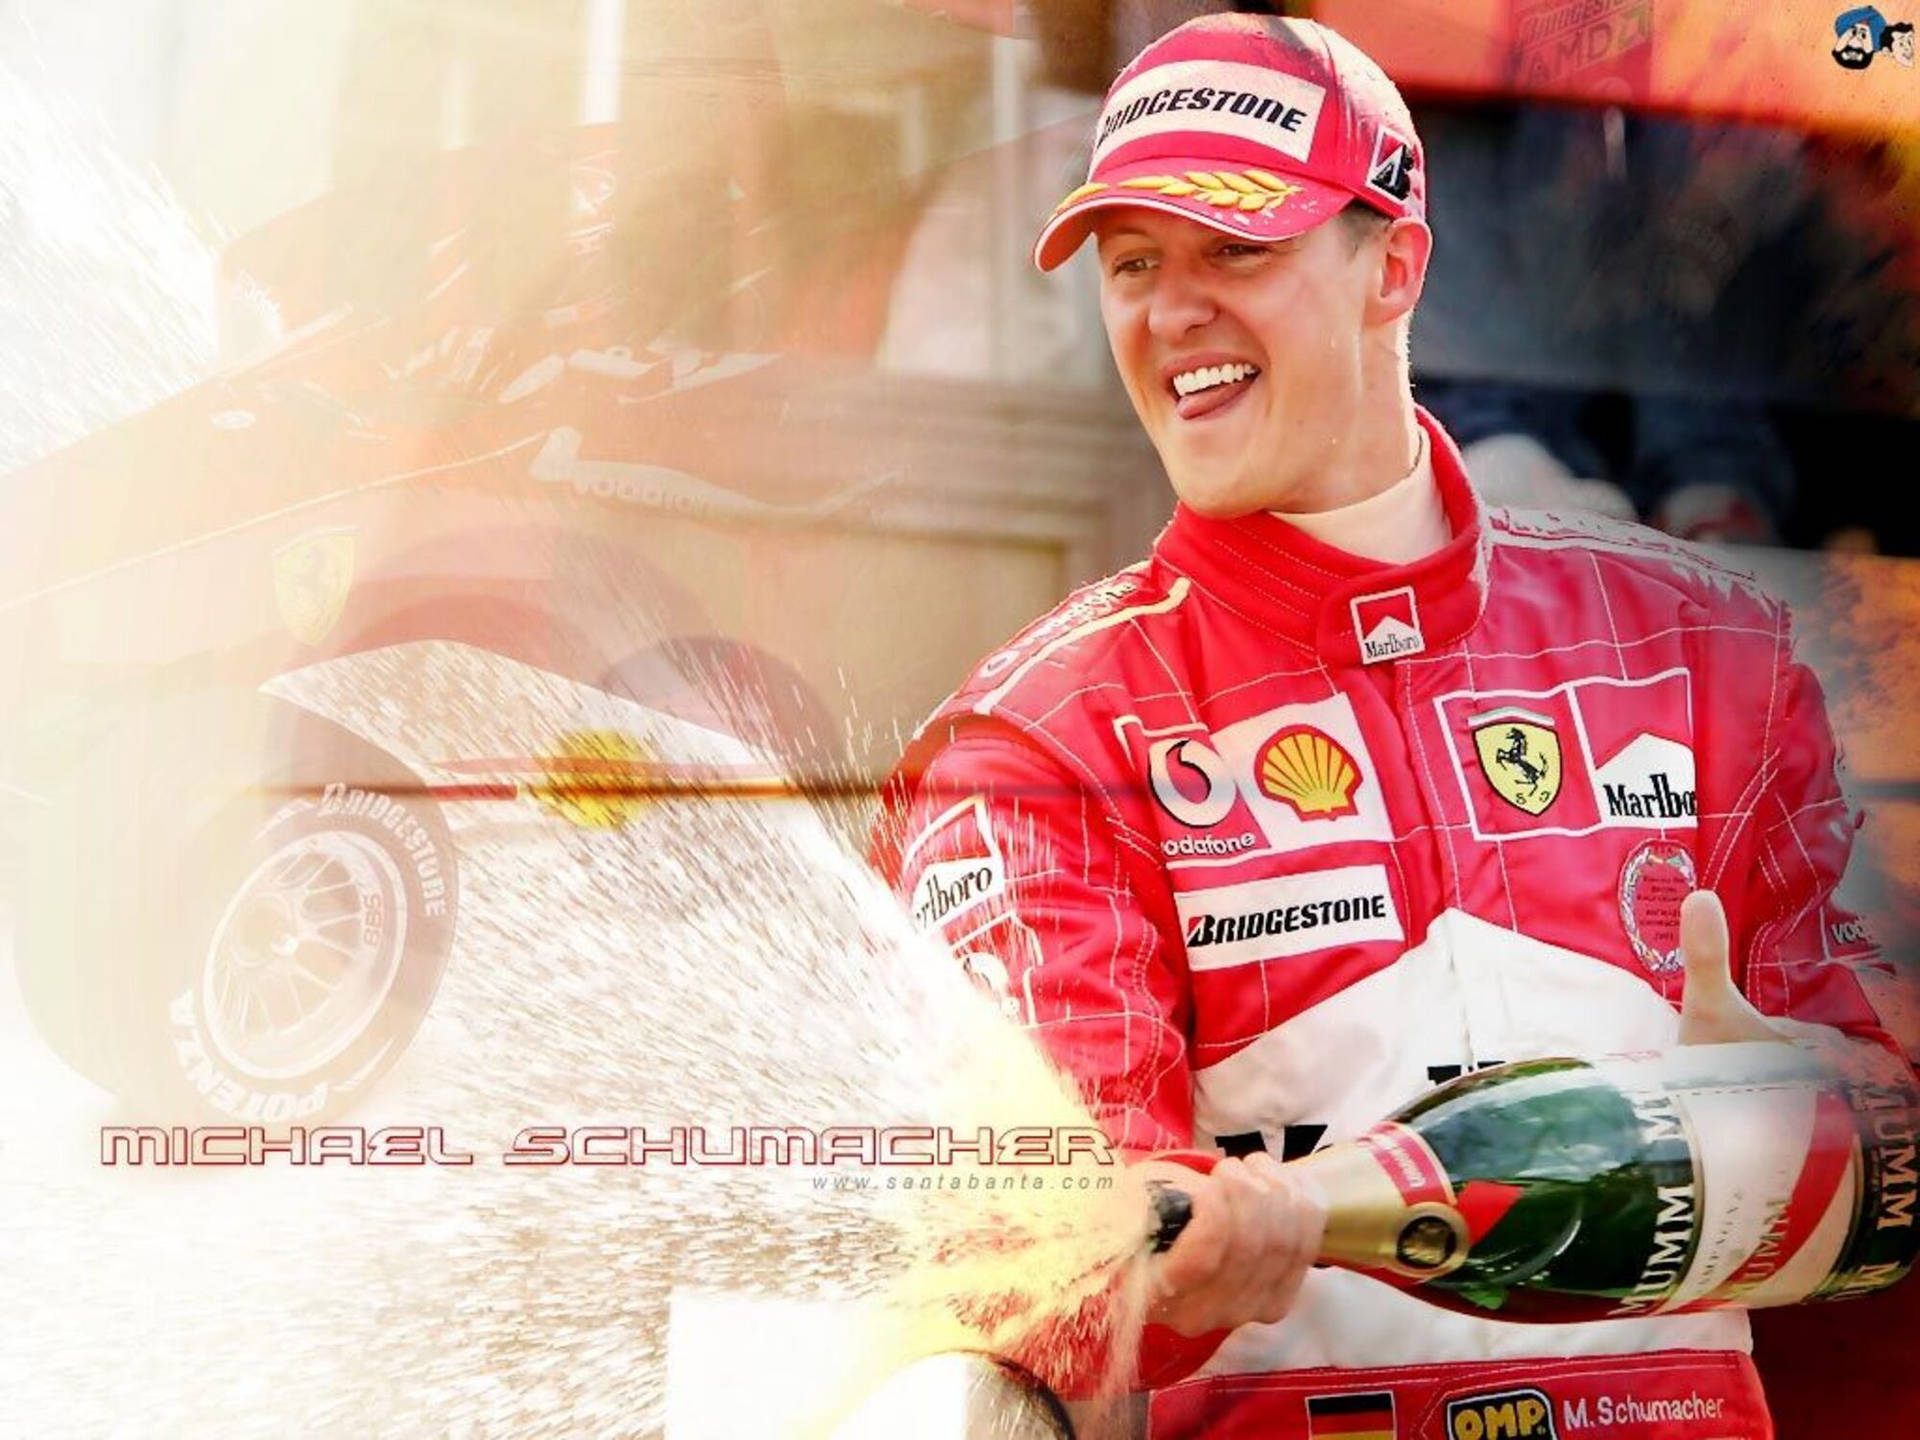 Fun Racer Michael Schumacher Background